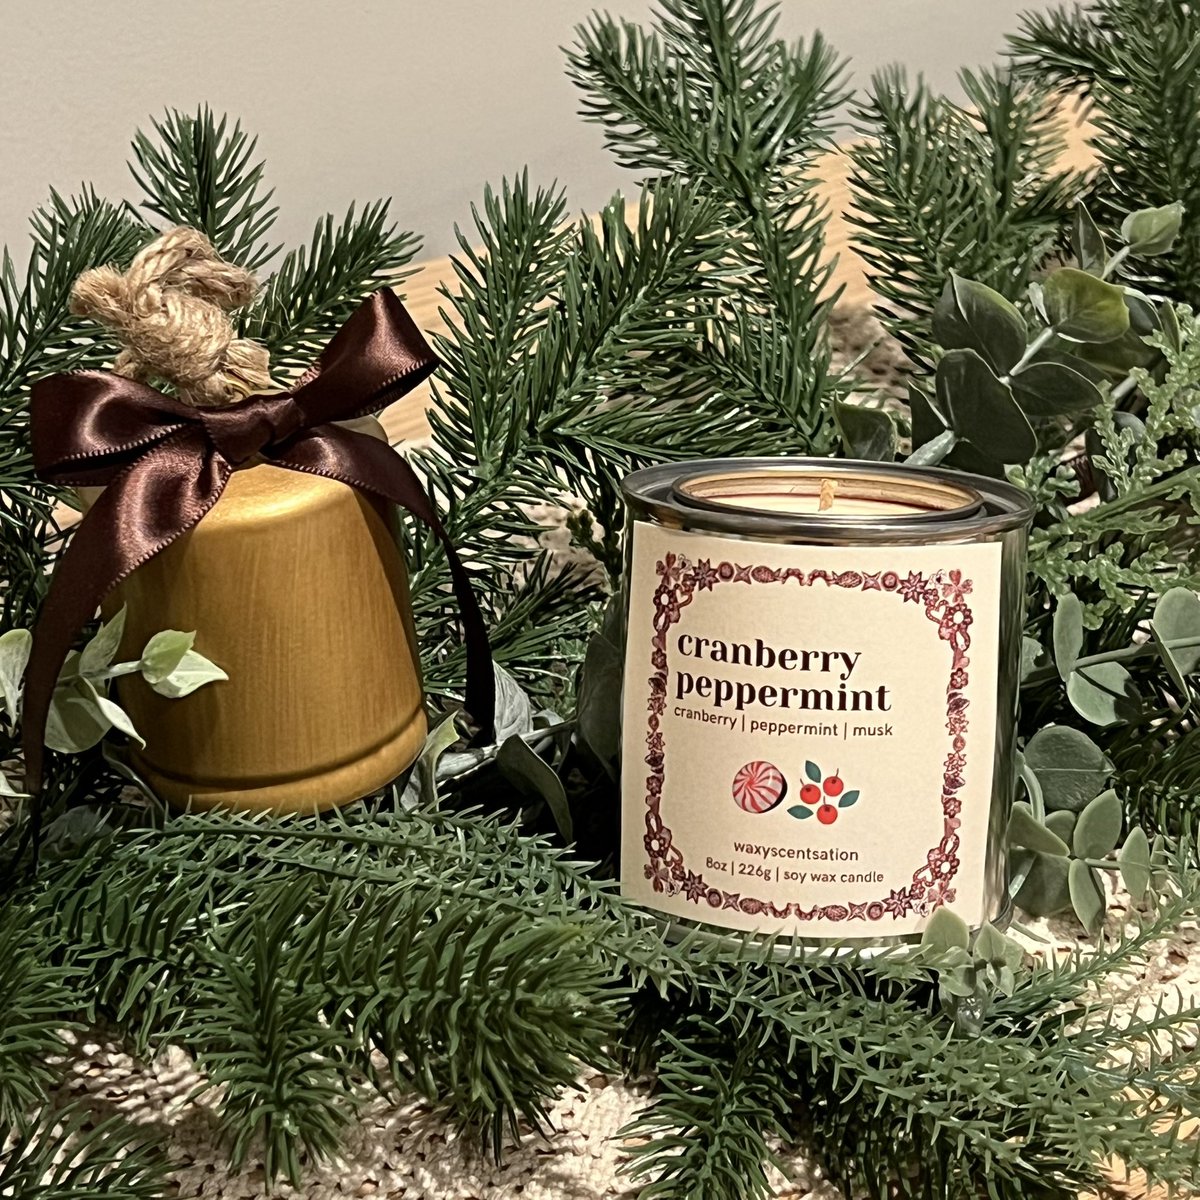 It’s tiiiiiiiiiiime 🎄🎄🎄 Christmas candles are now available 🌟 waxyscentsation.com